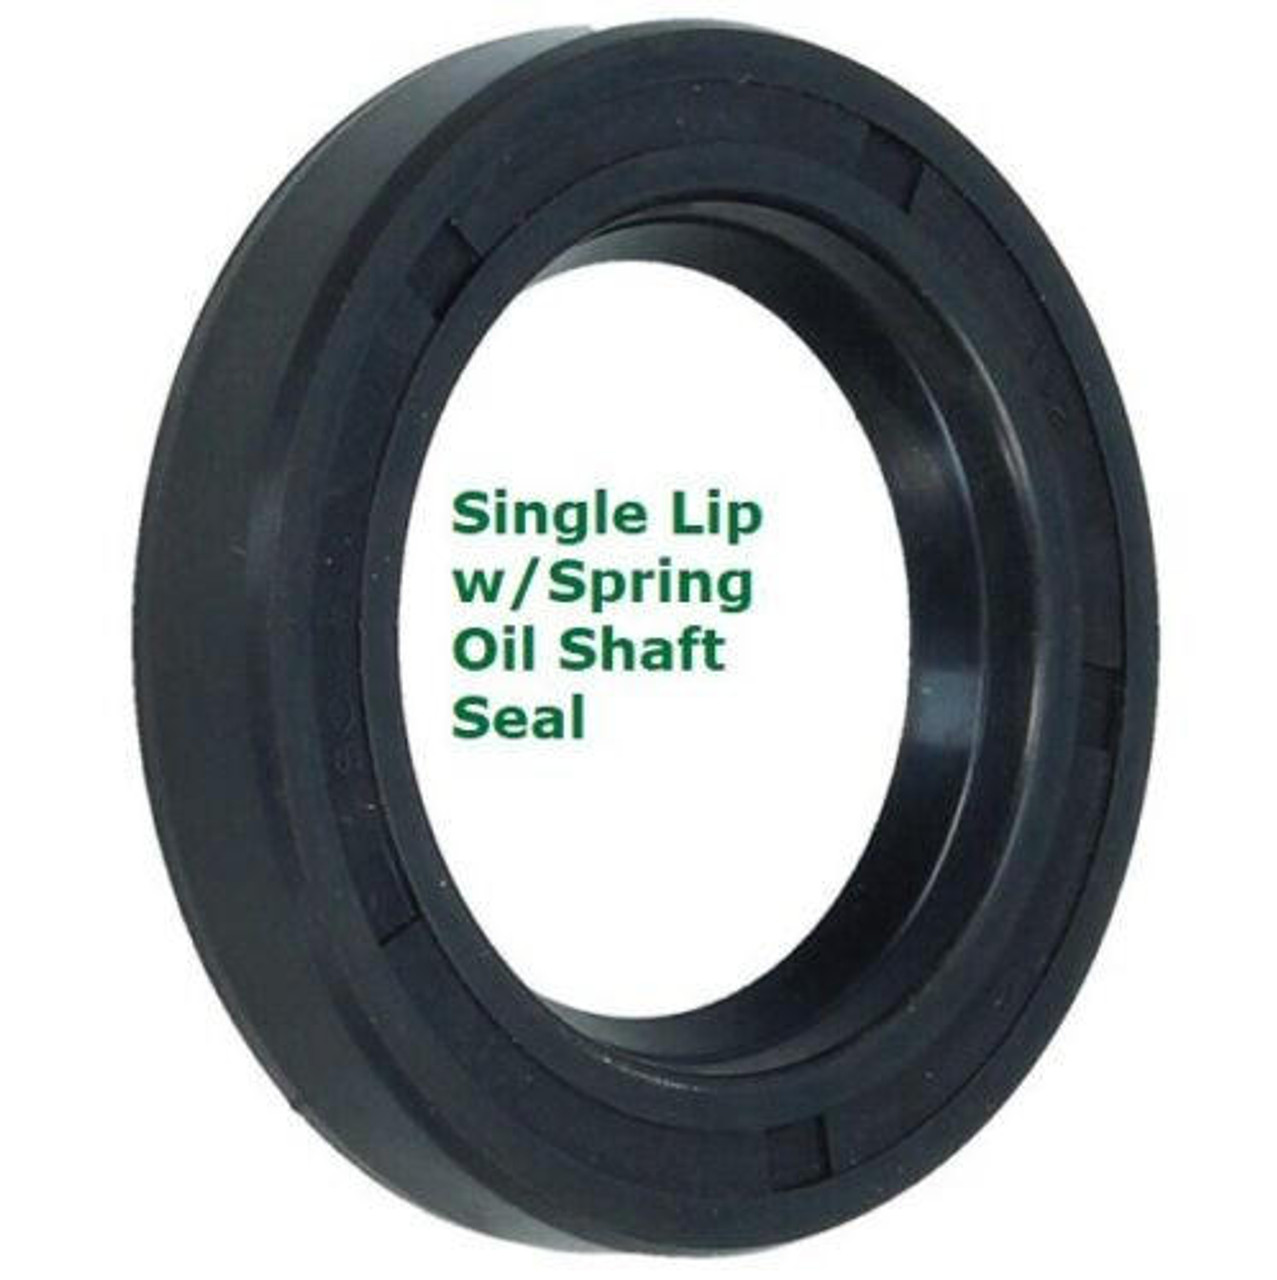 Metric Oil Shaft Seal 50 x 80 x 10mm Single Lip   Price for 1 pc